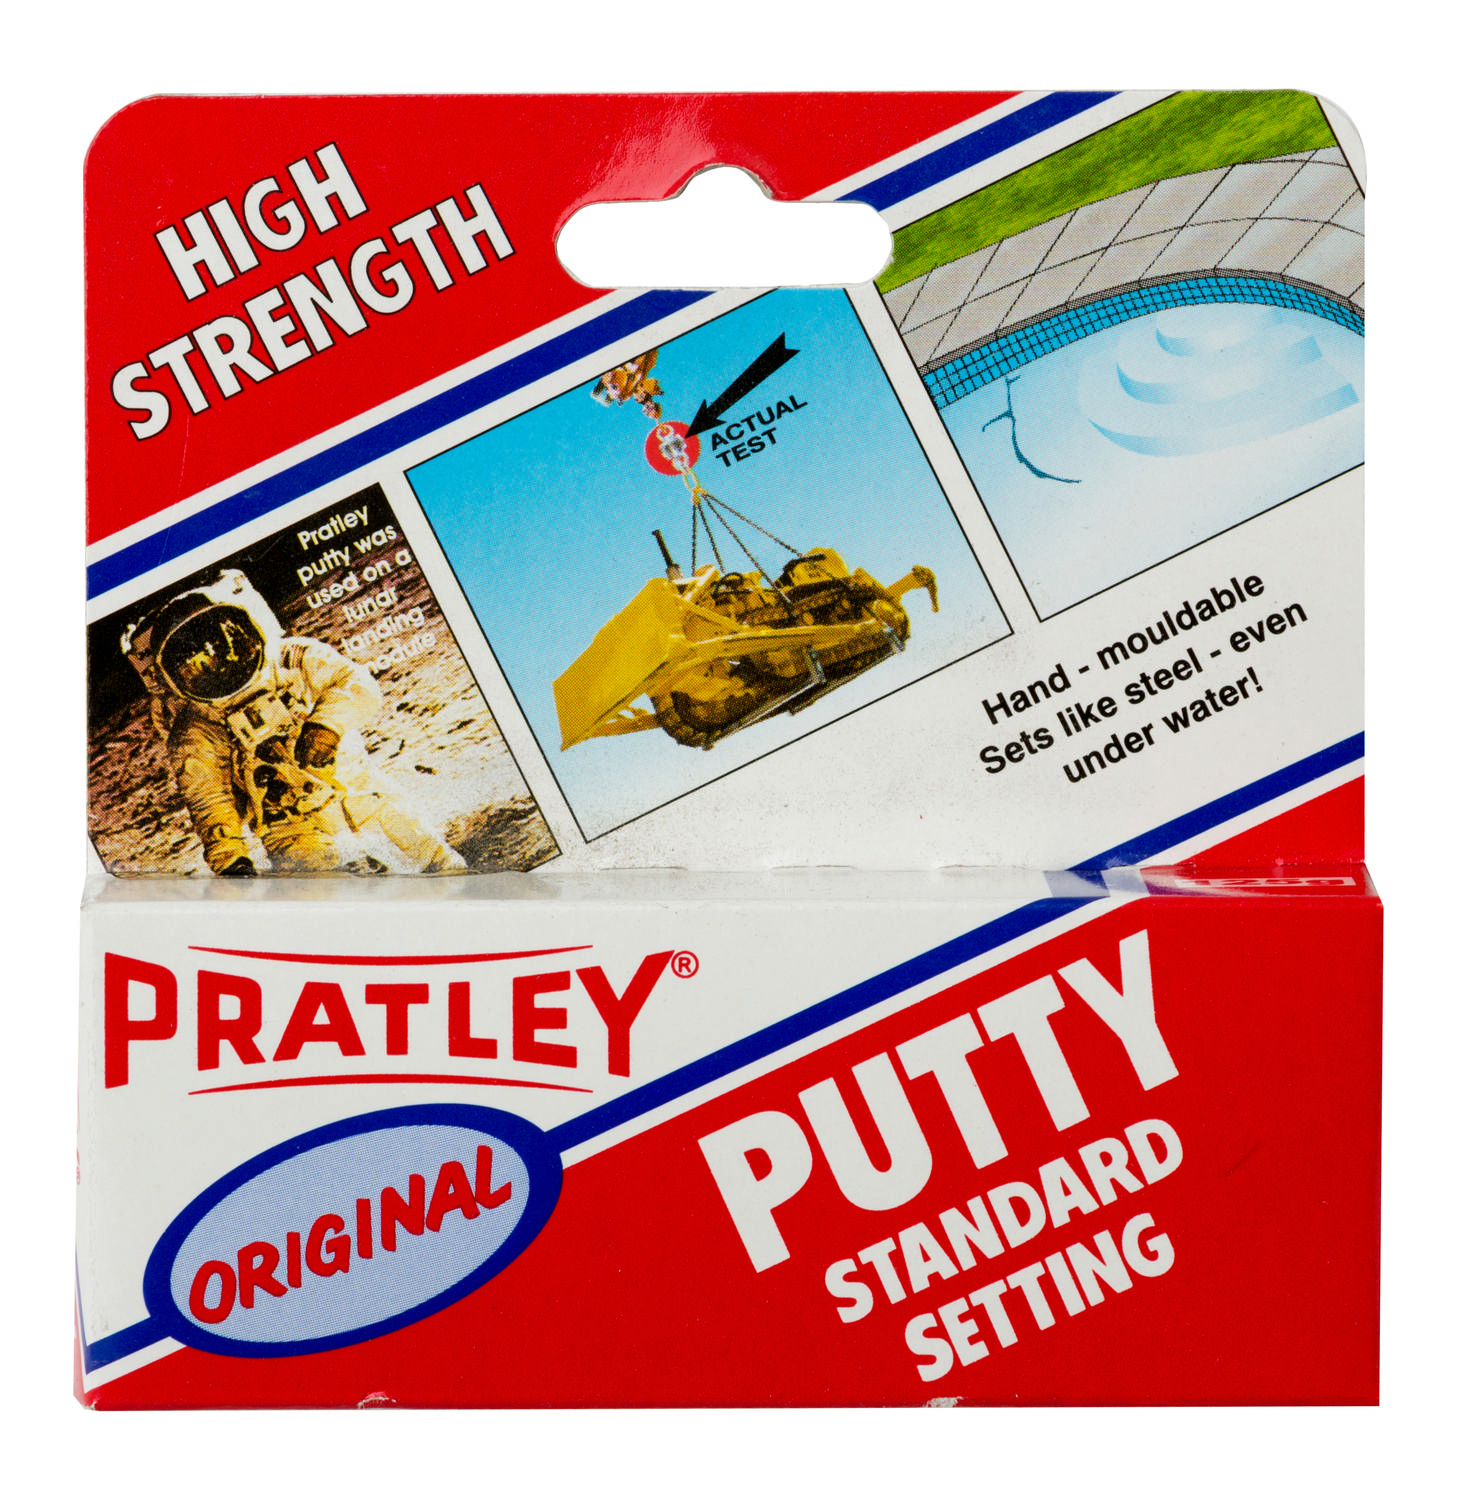 Pratley Putty Standard Setting